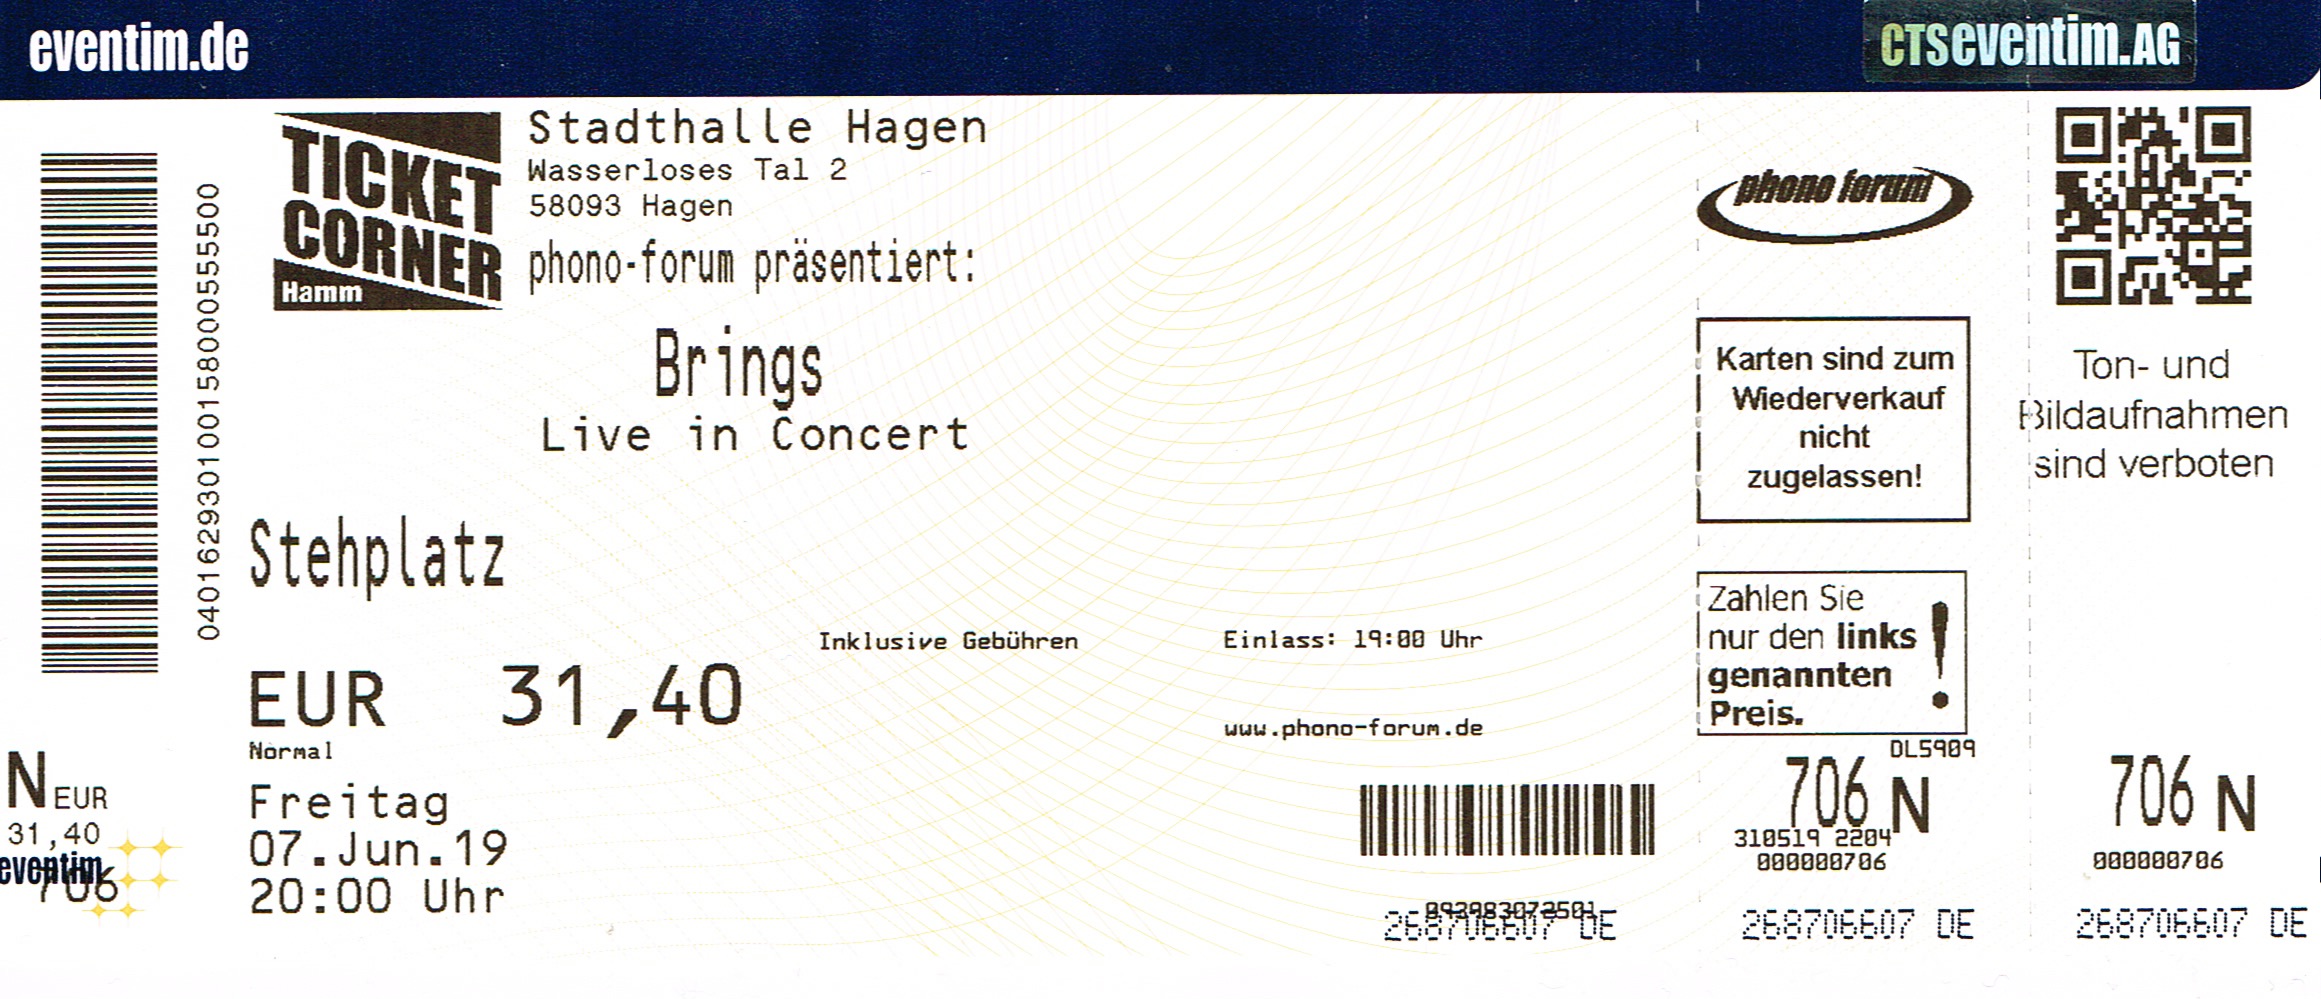 07.06.2019 – Brings @Hagen/Stadthalle